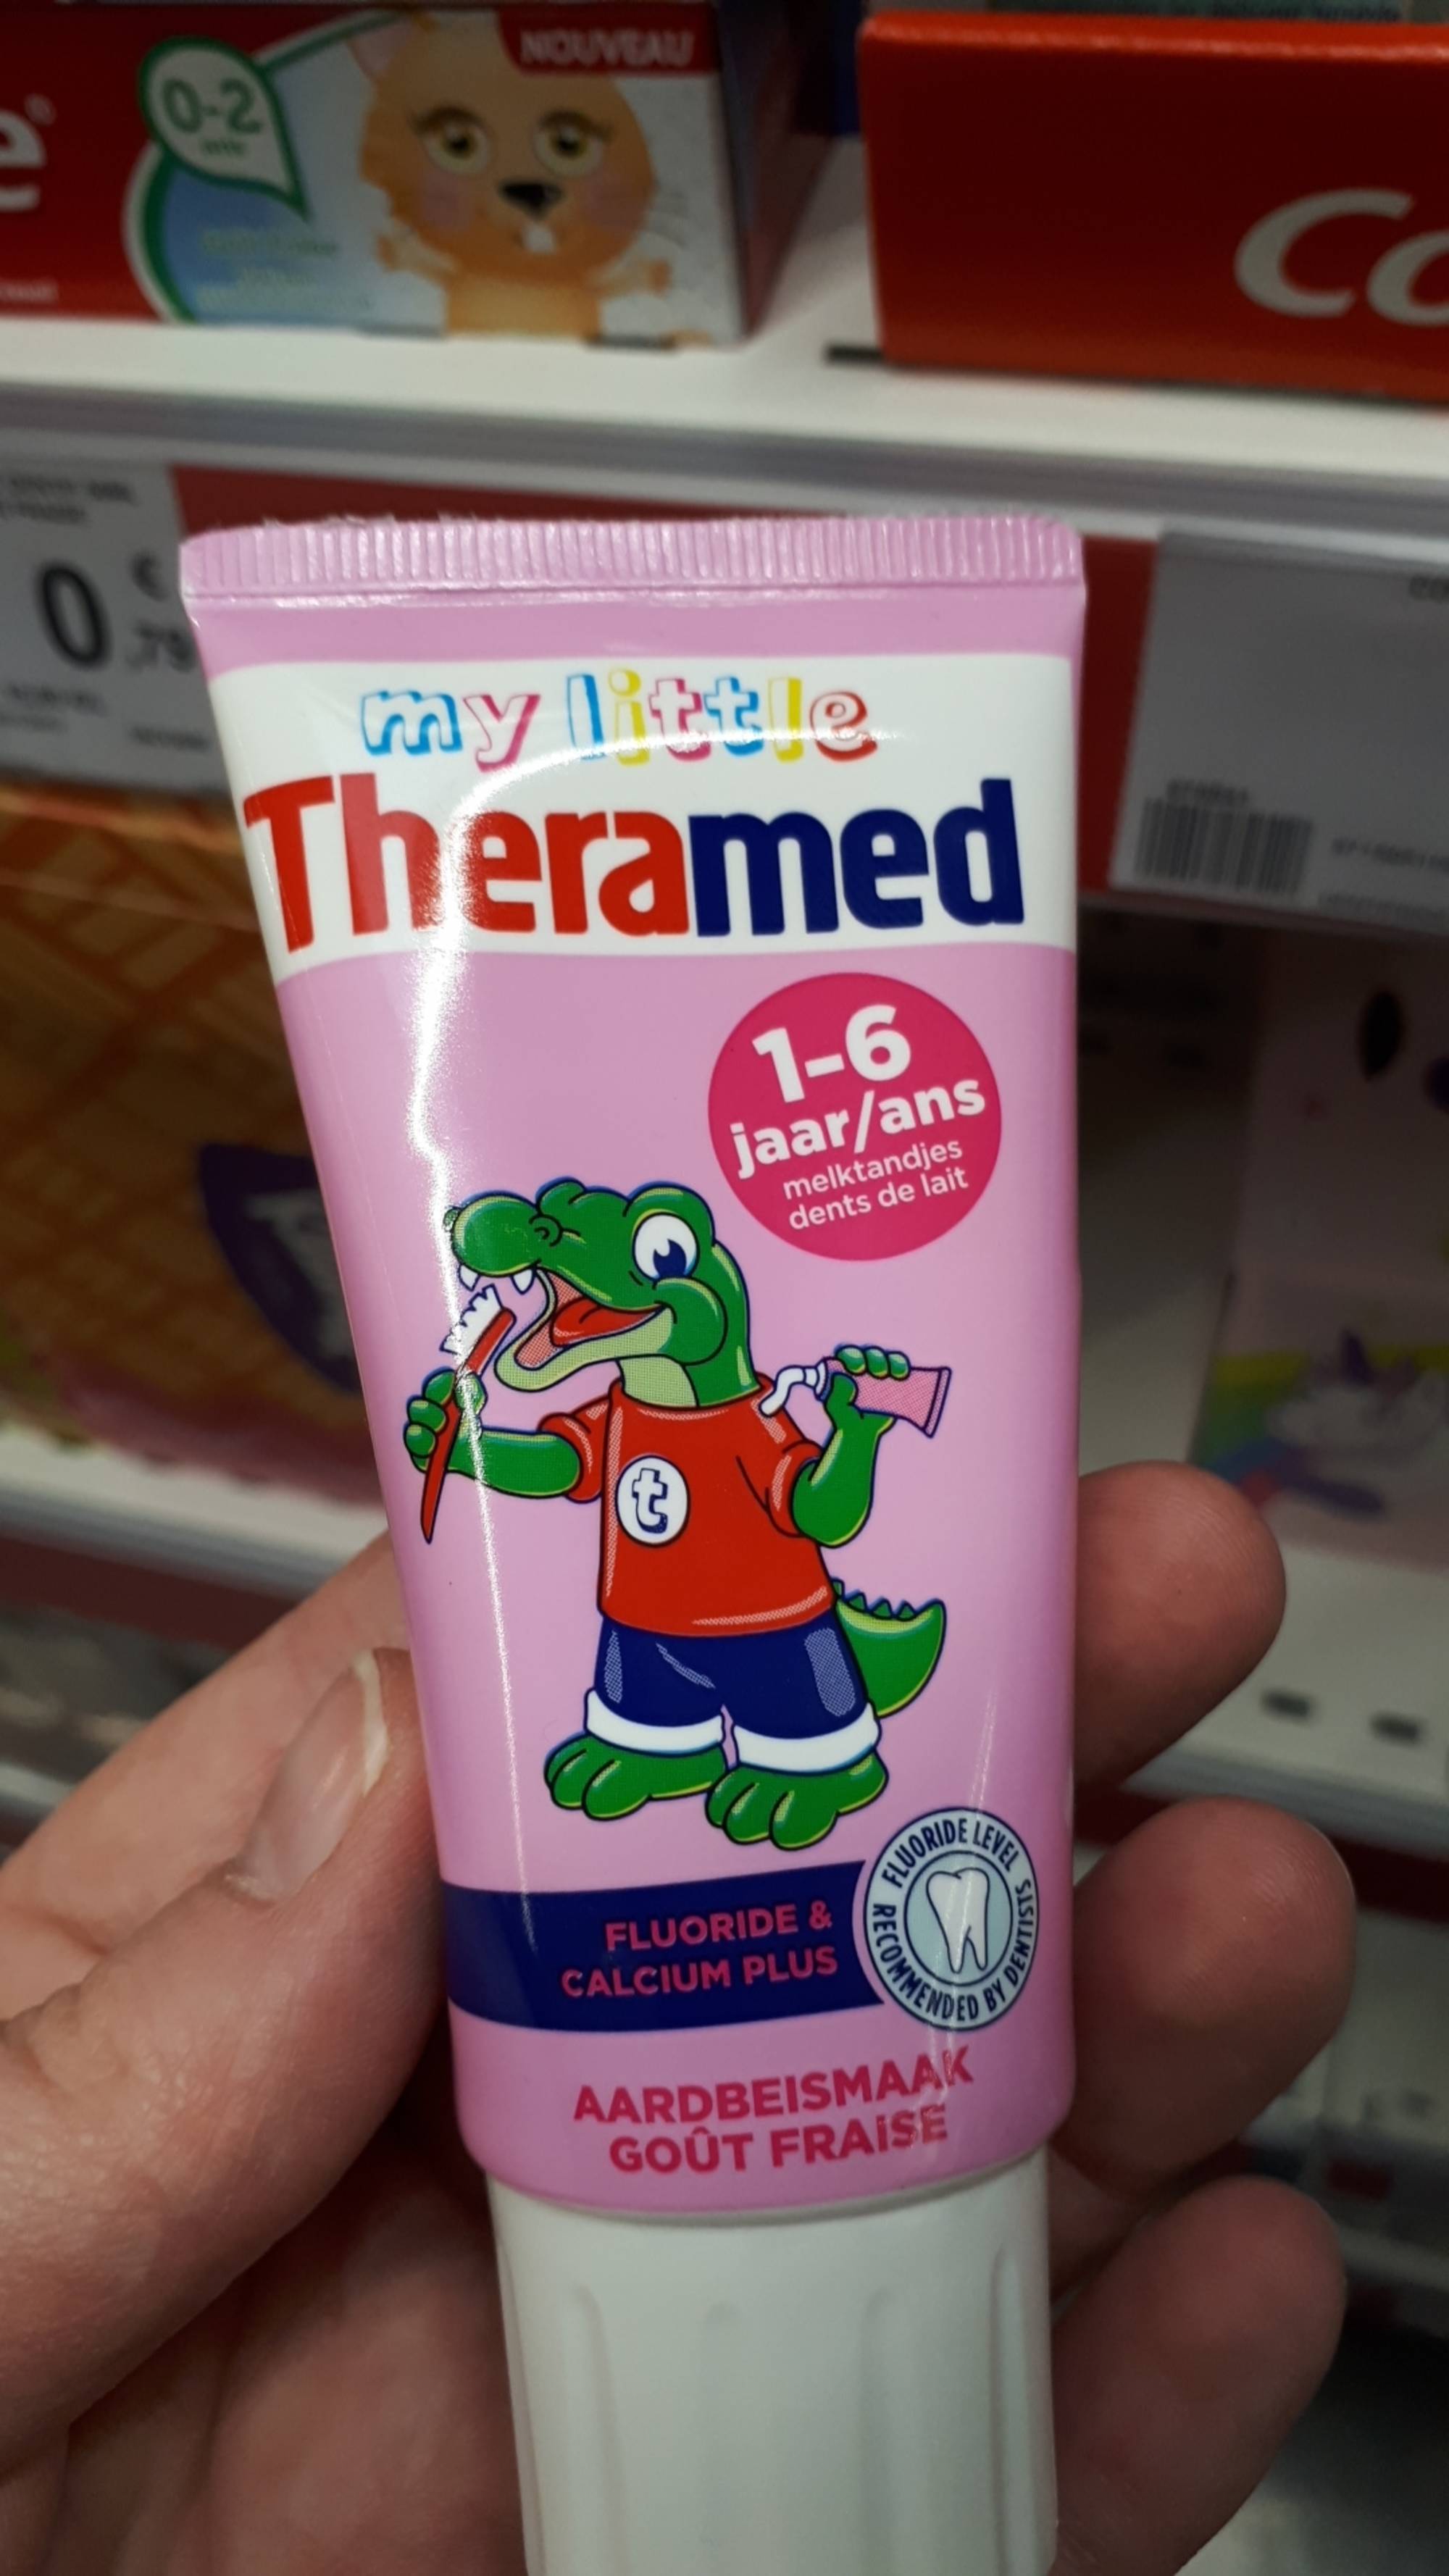 THERAMED - My little theramed - Dentifrice 1-6 ans dents de lait goût fraise